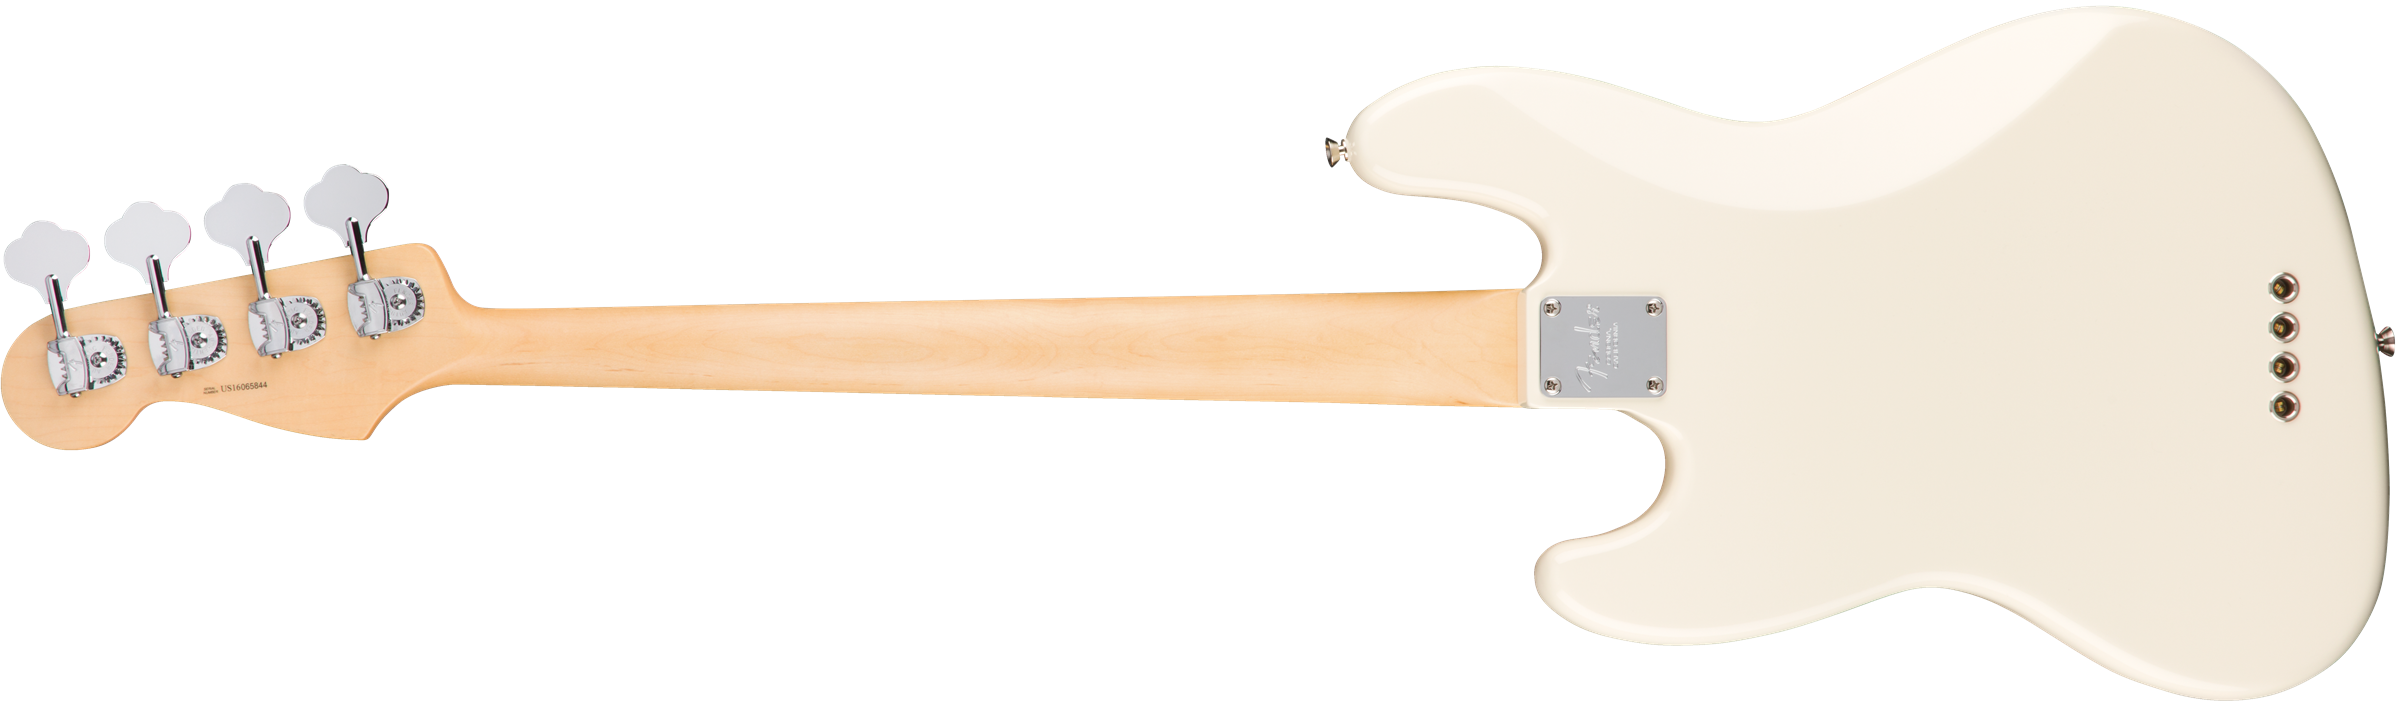 Fender Jazz Bass American Professional 2017 Usa  Mn - Olympic White - Bajo eléctrico de cuerpo sólido - Variation 1